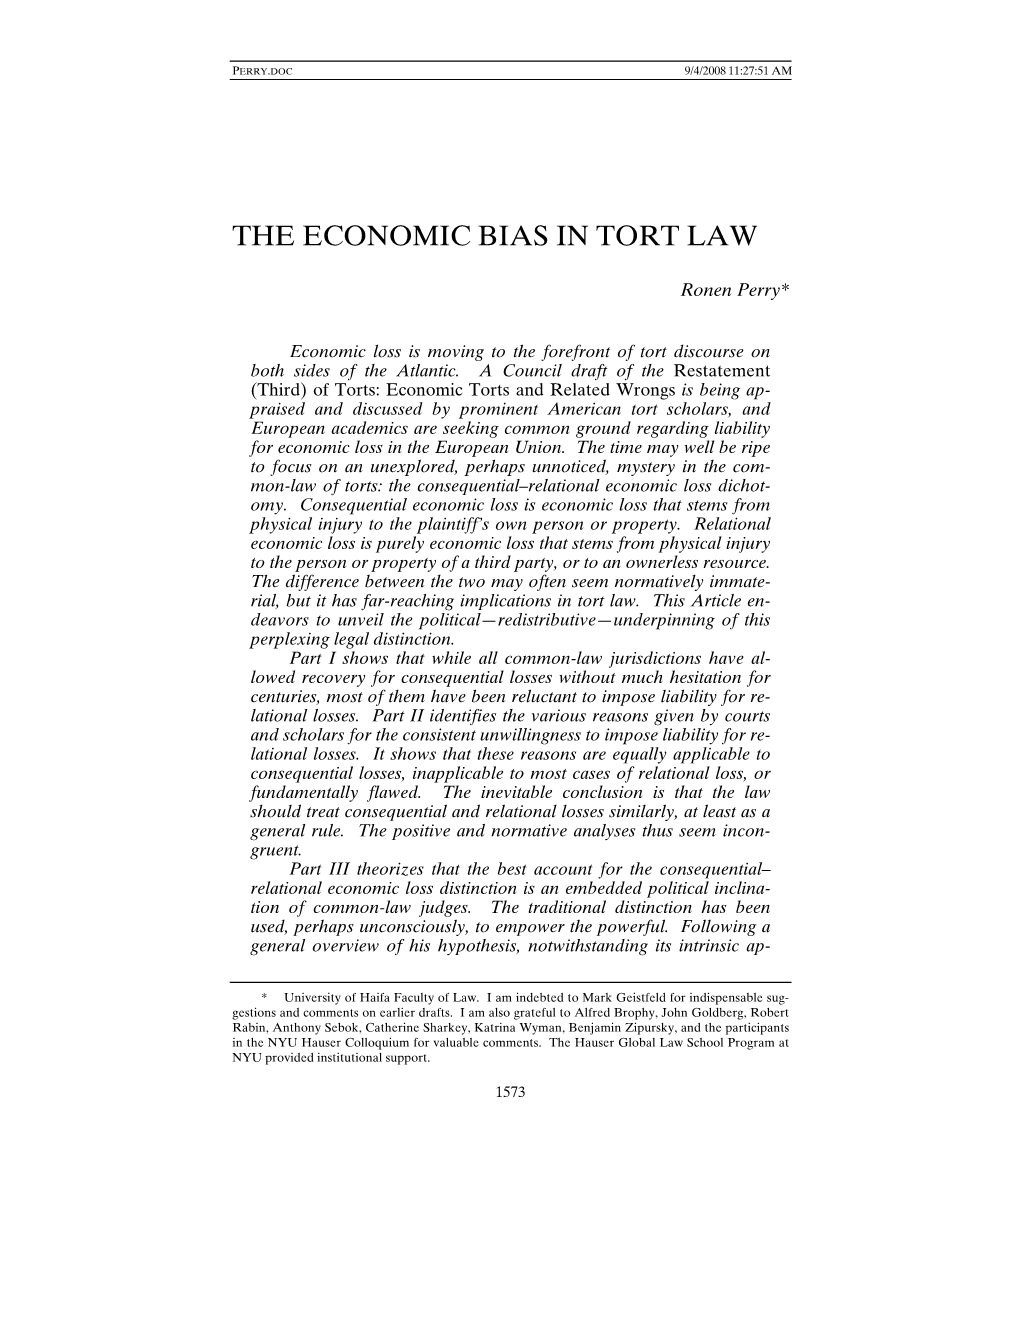 The Economic Bias in Tort Law